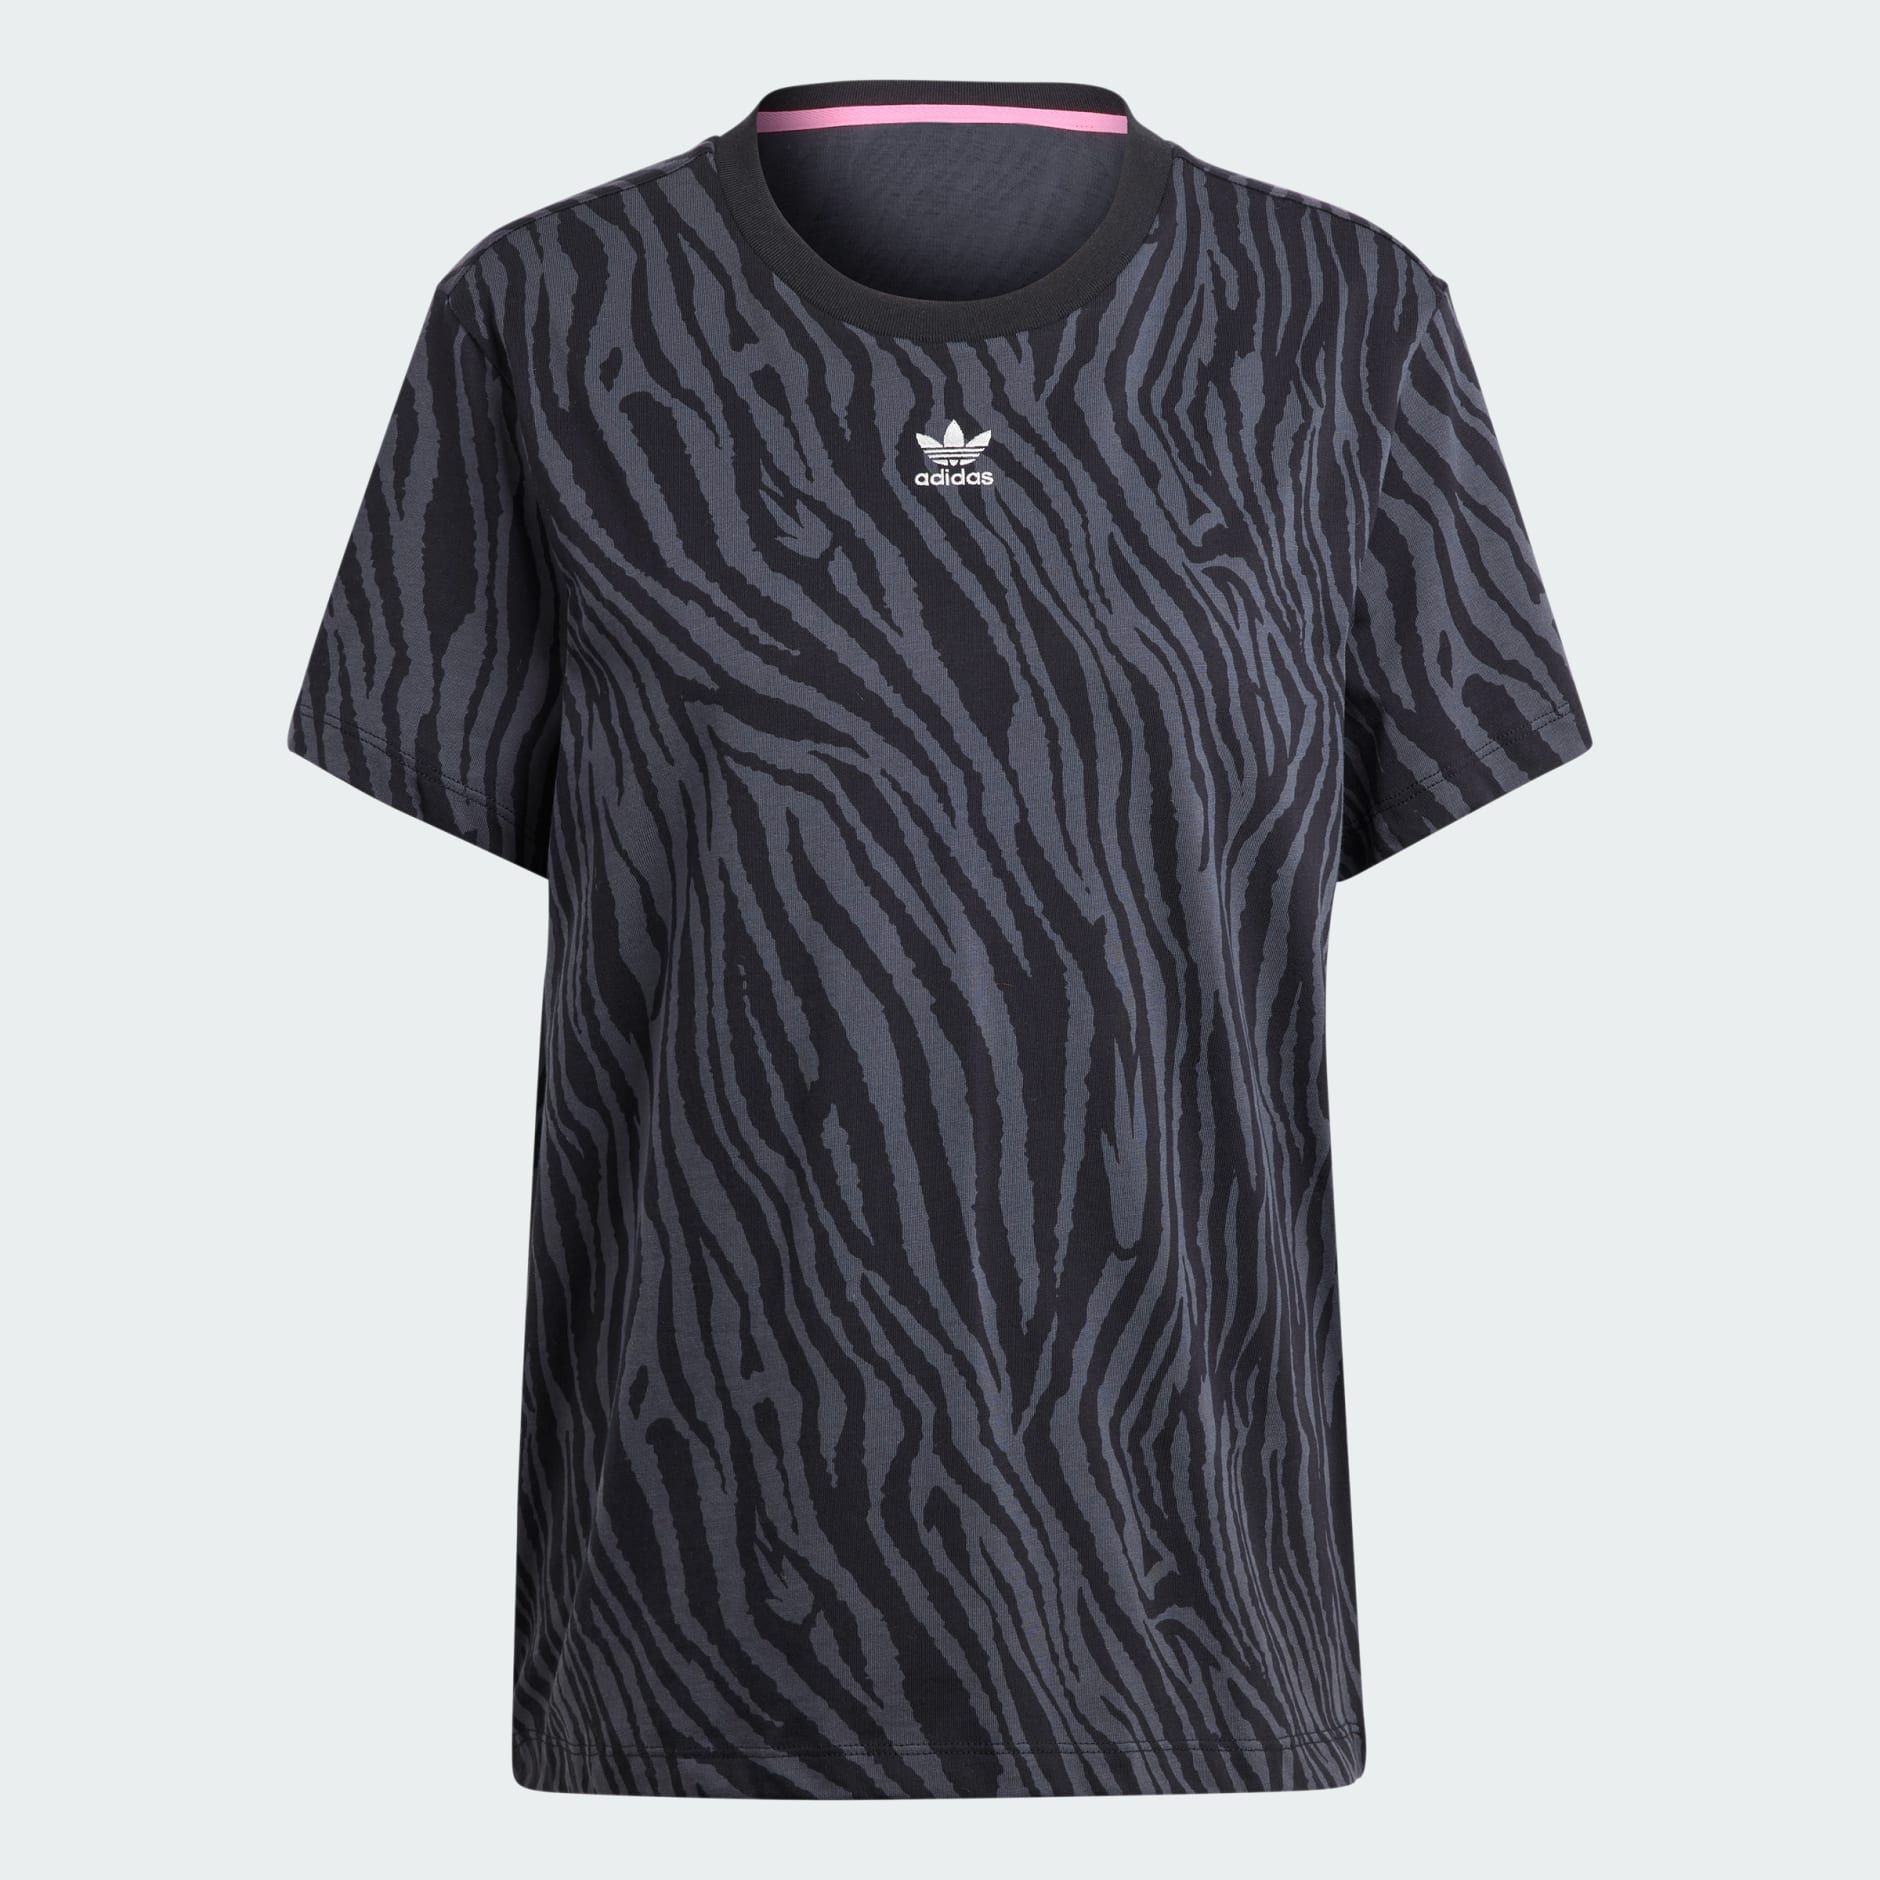 adidas Allover Zebra Animal Tee LK Grey - Print adidas Essentials 